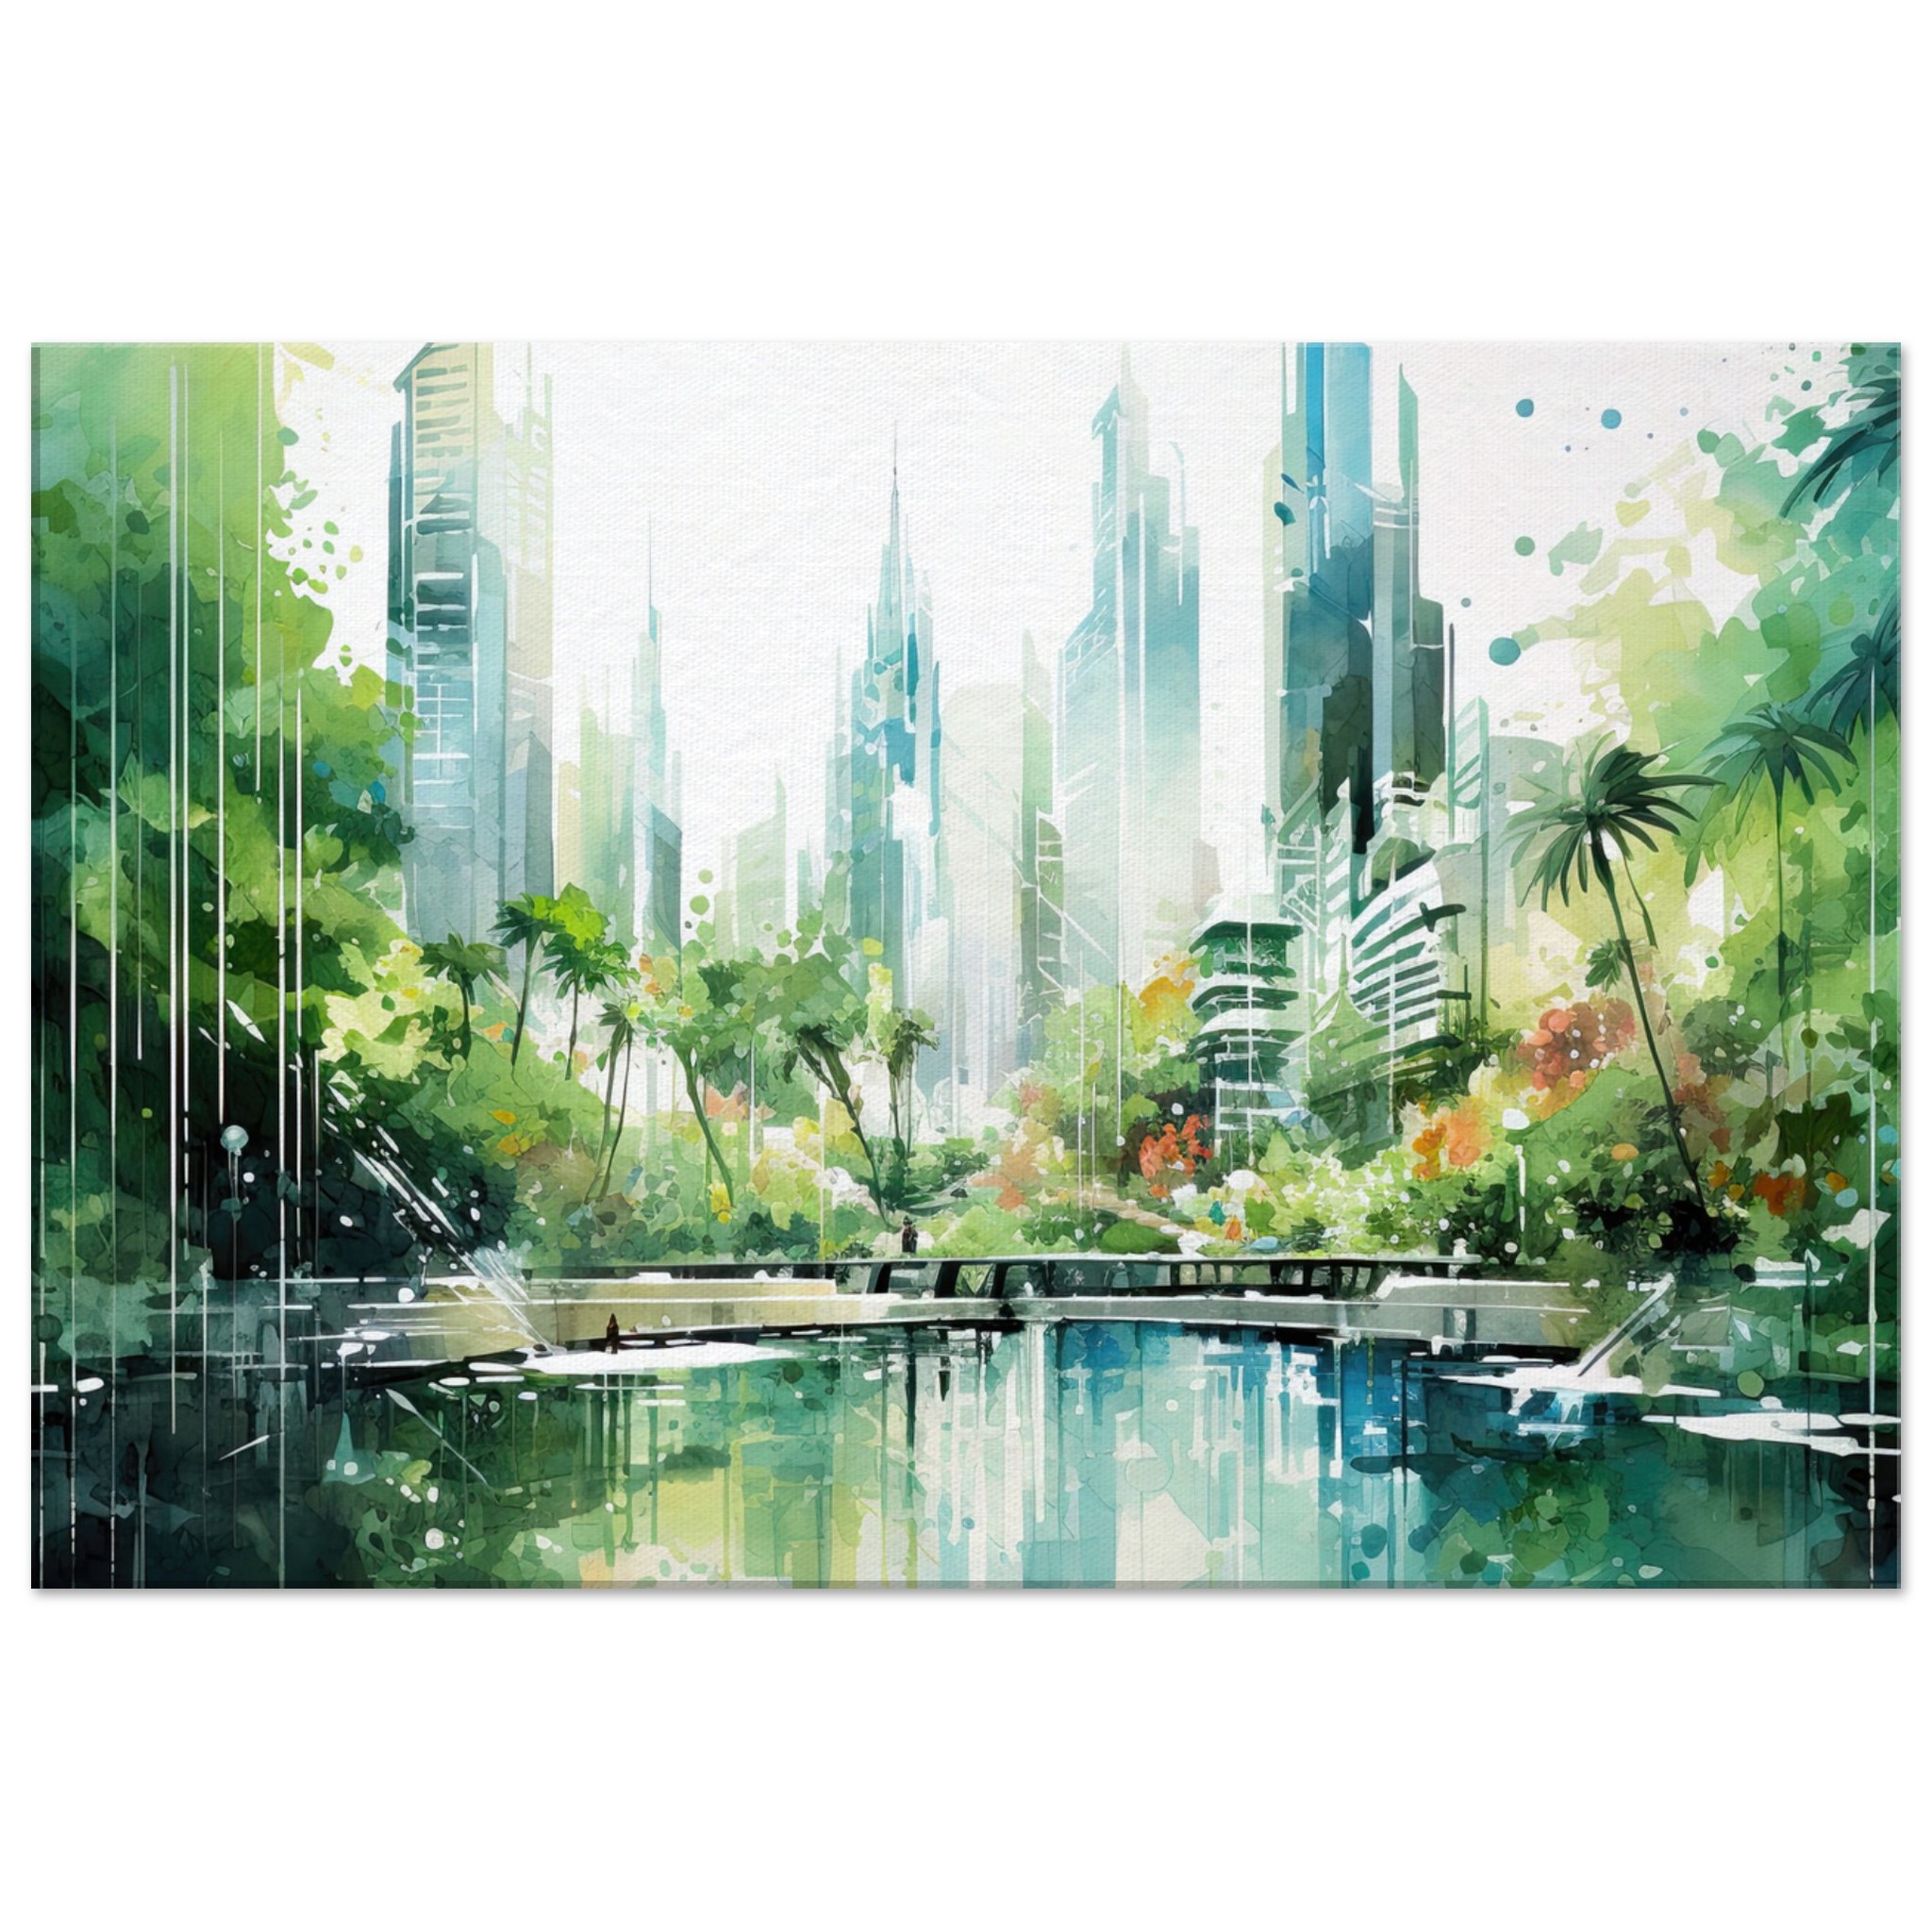 Rainy City Day Watercolor Canvas Print – 60×90 cm / 24×36″, Thick